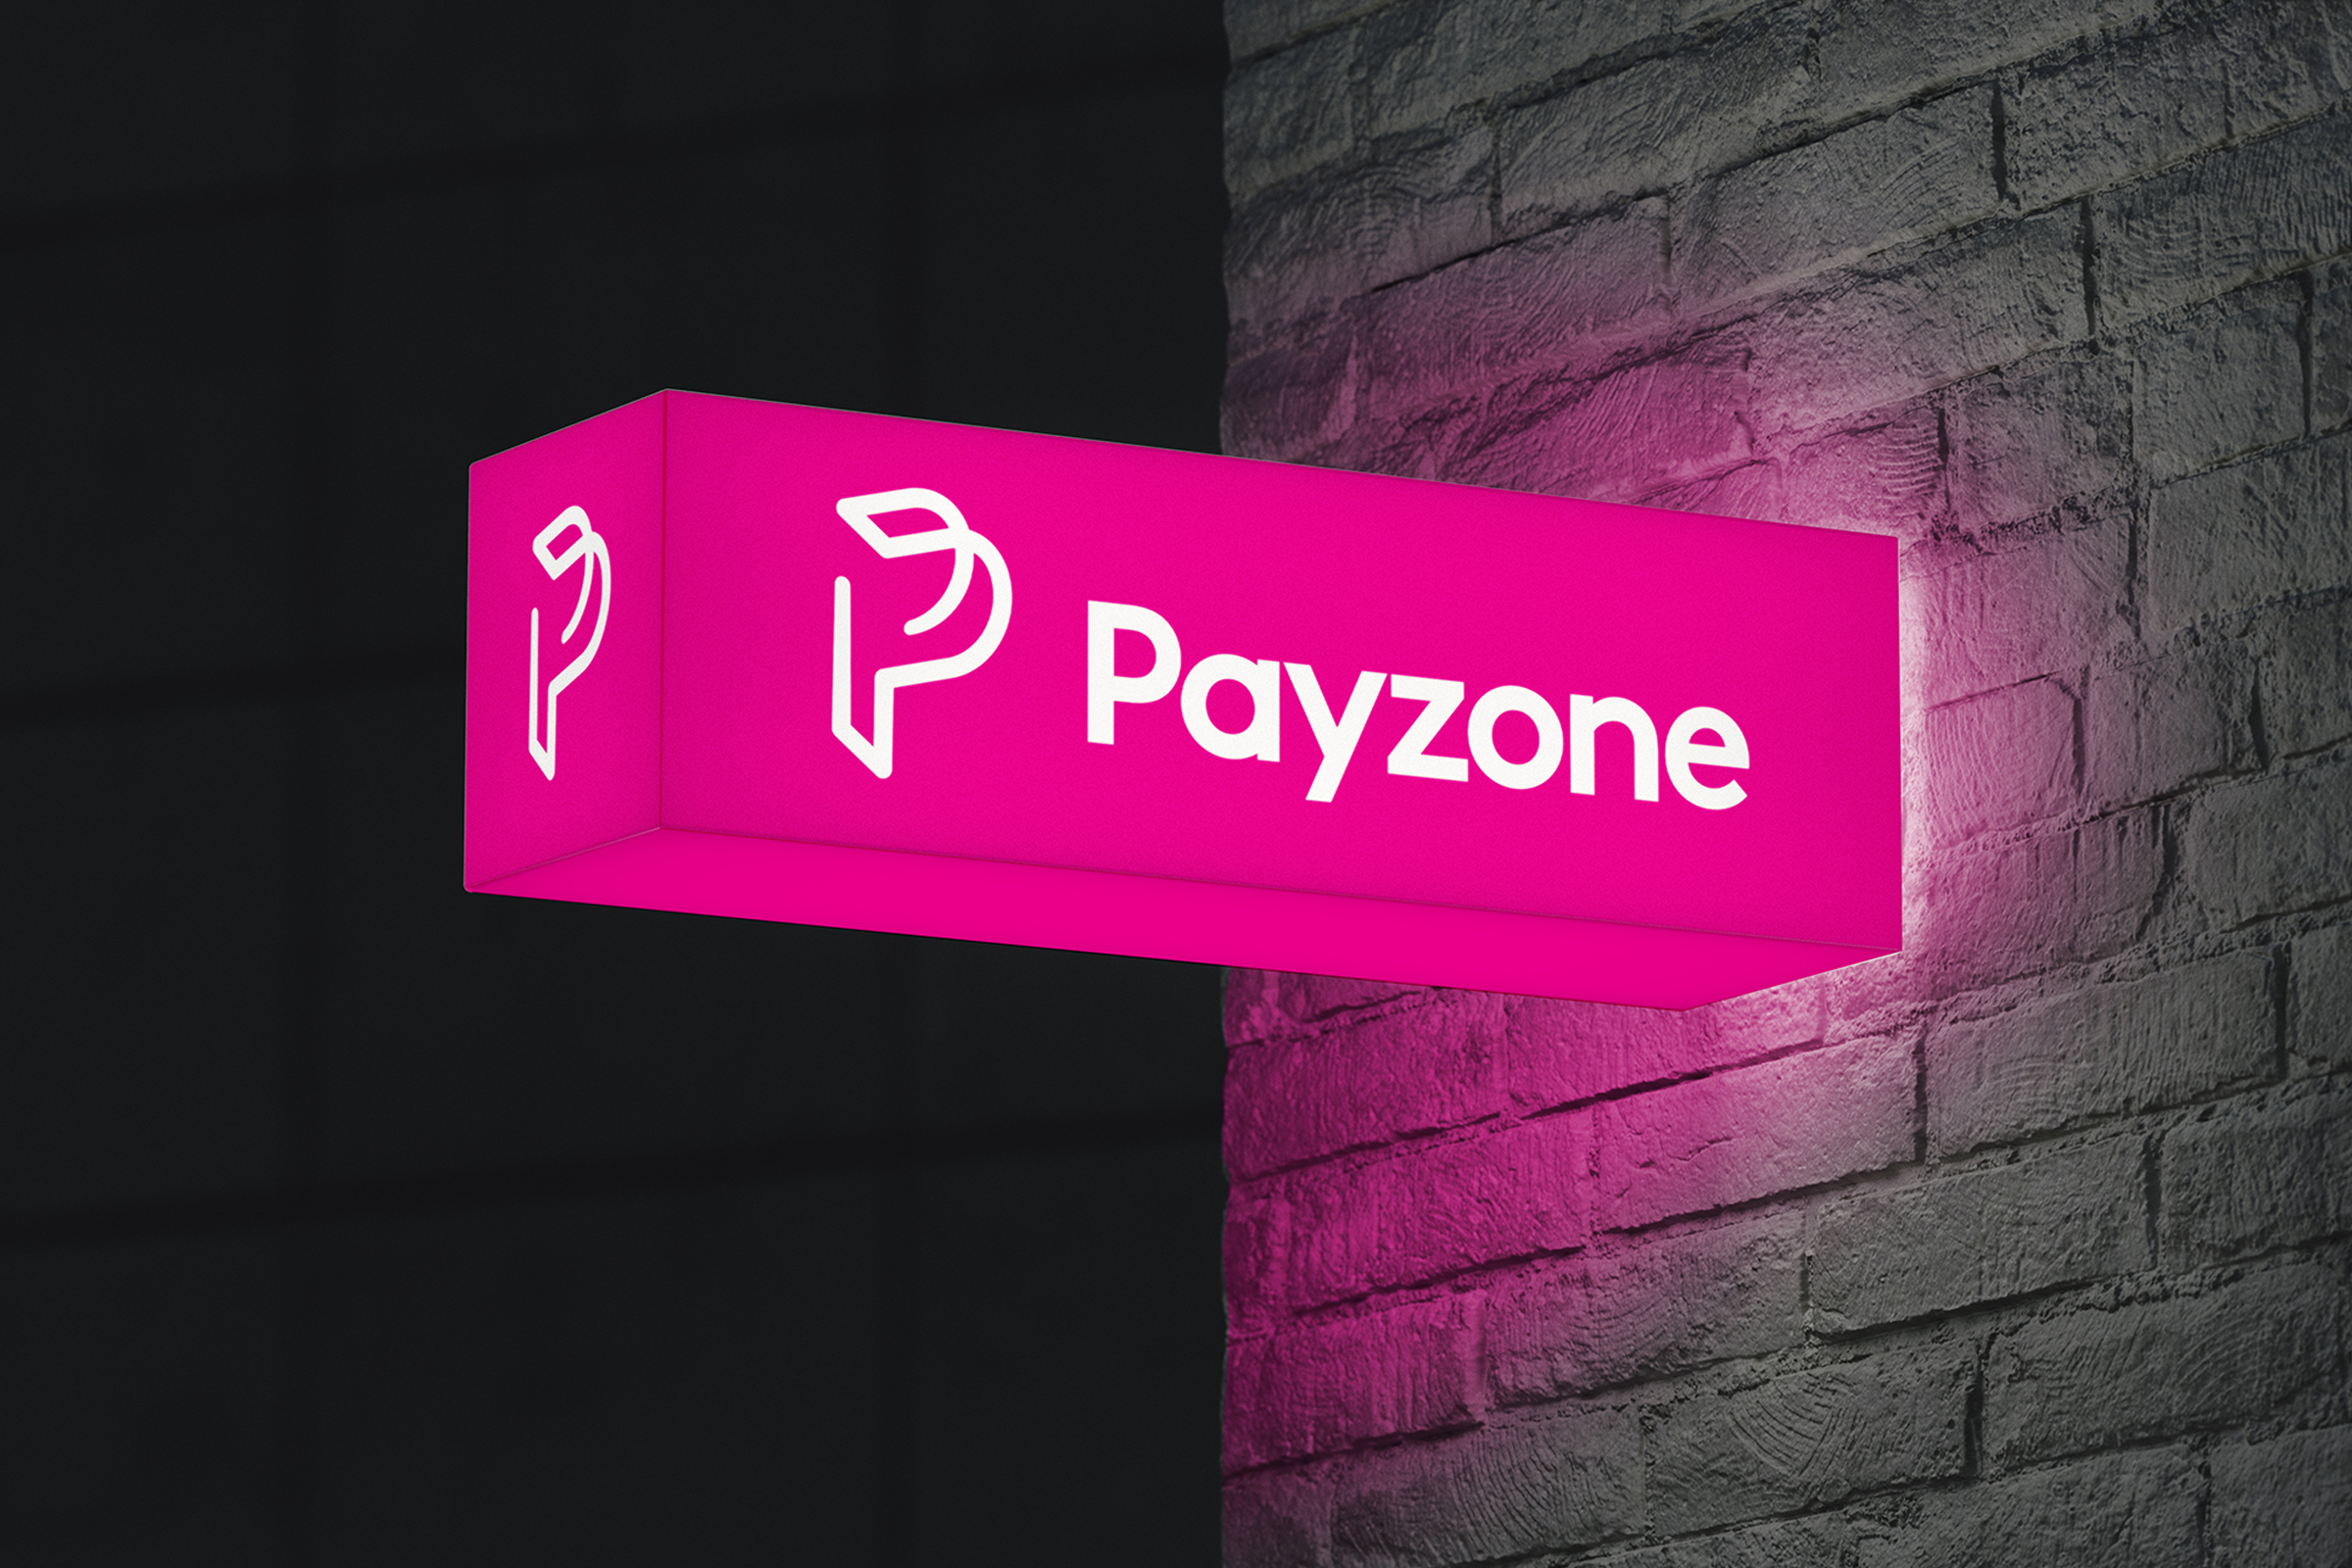 Payzone Signage Nightx